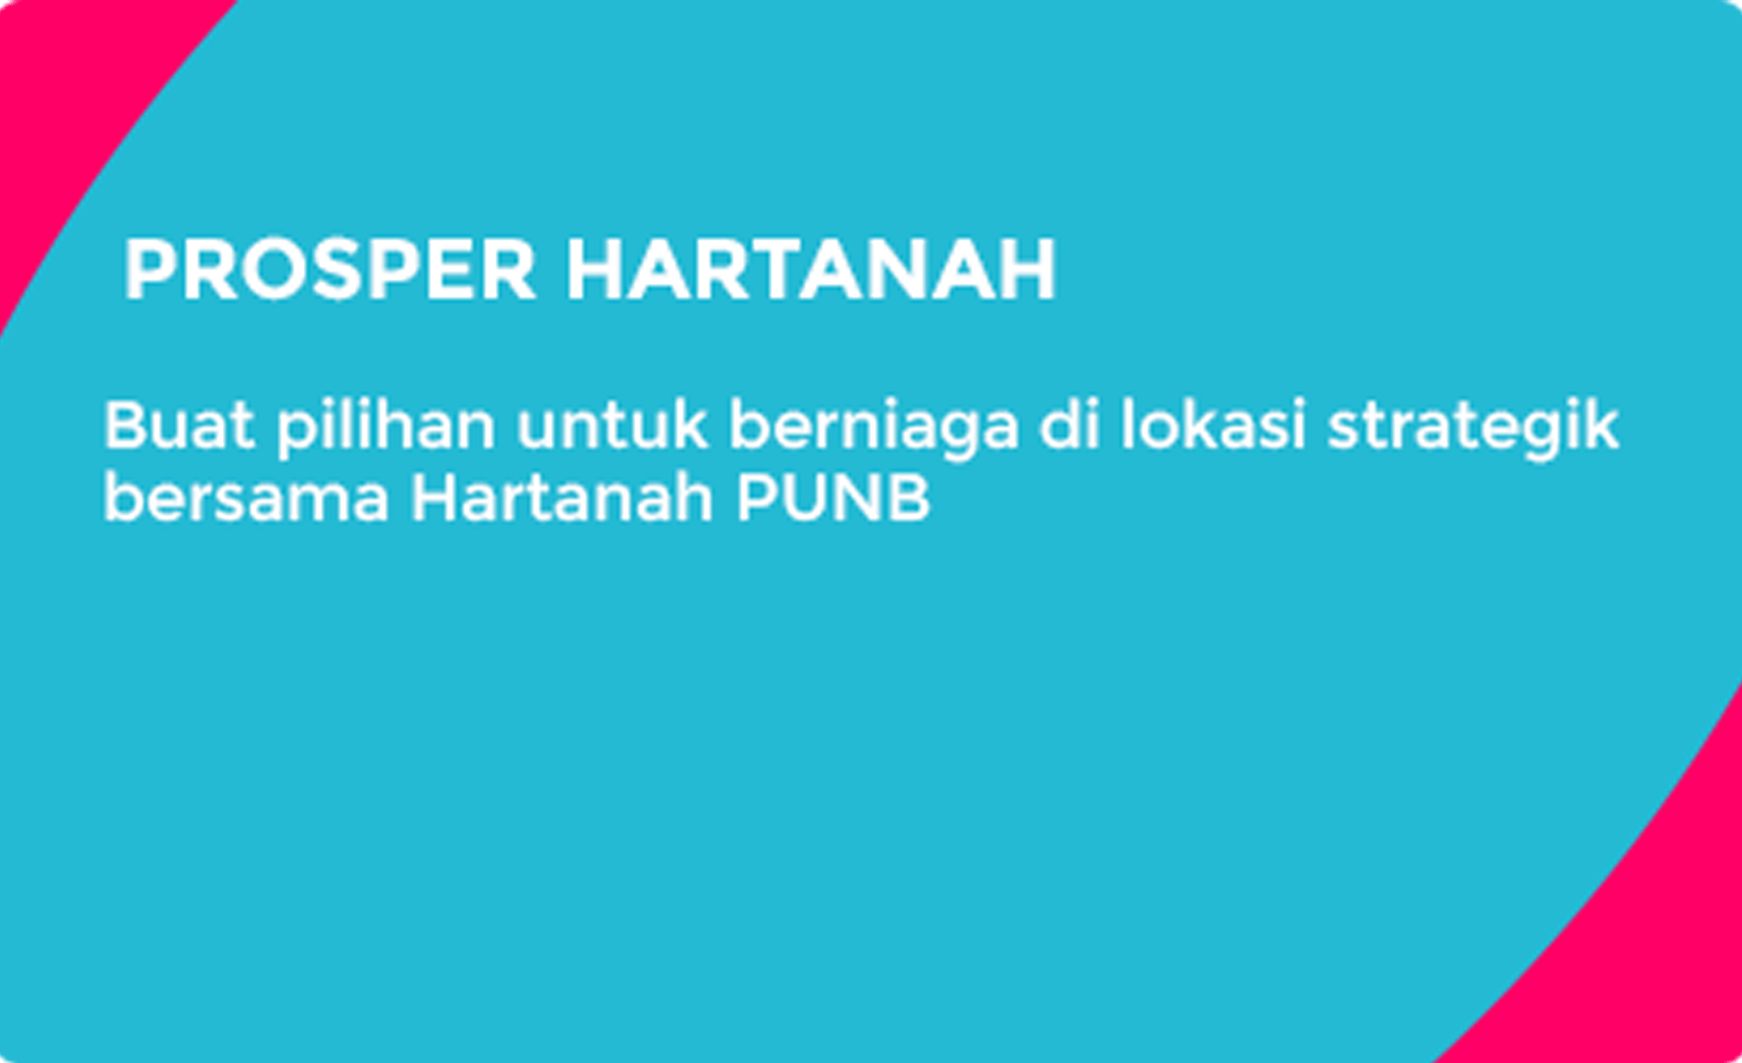 PROSPER HARTANAH